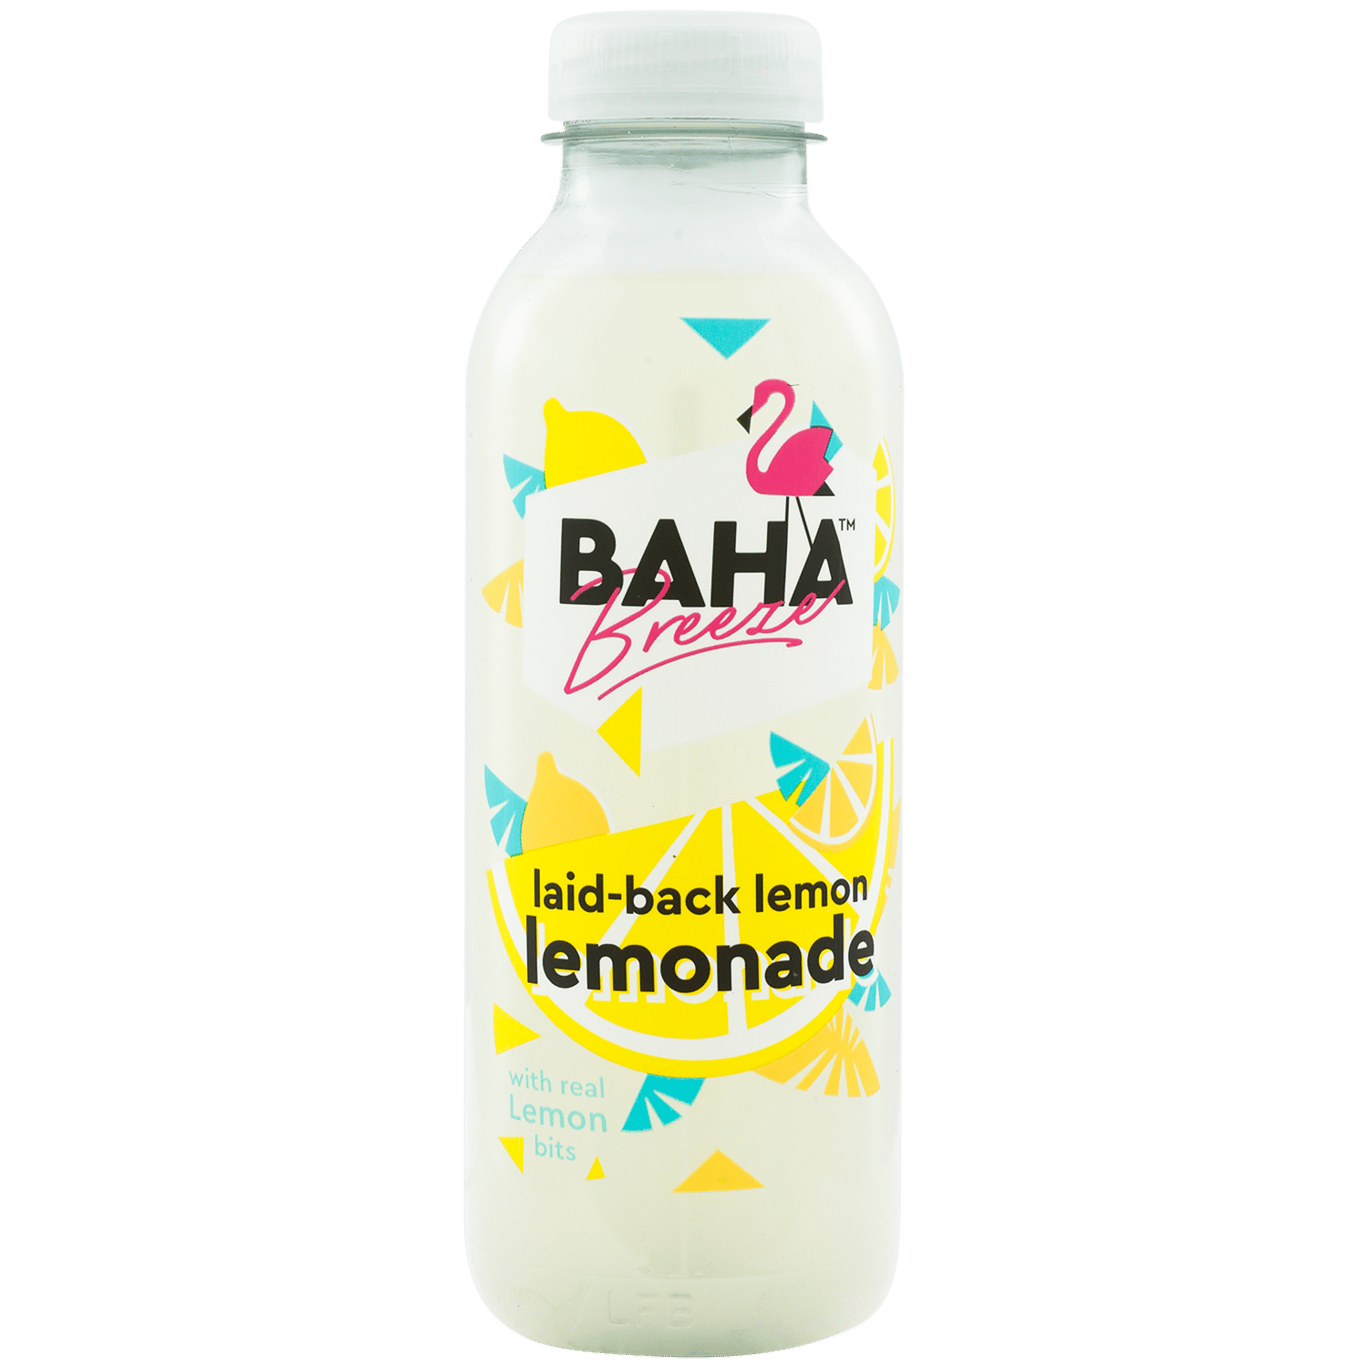 Baha Breeze Limonade 